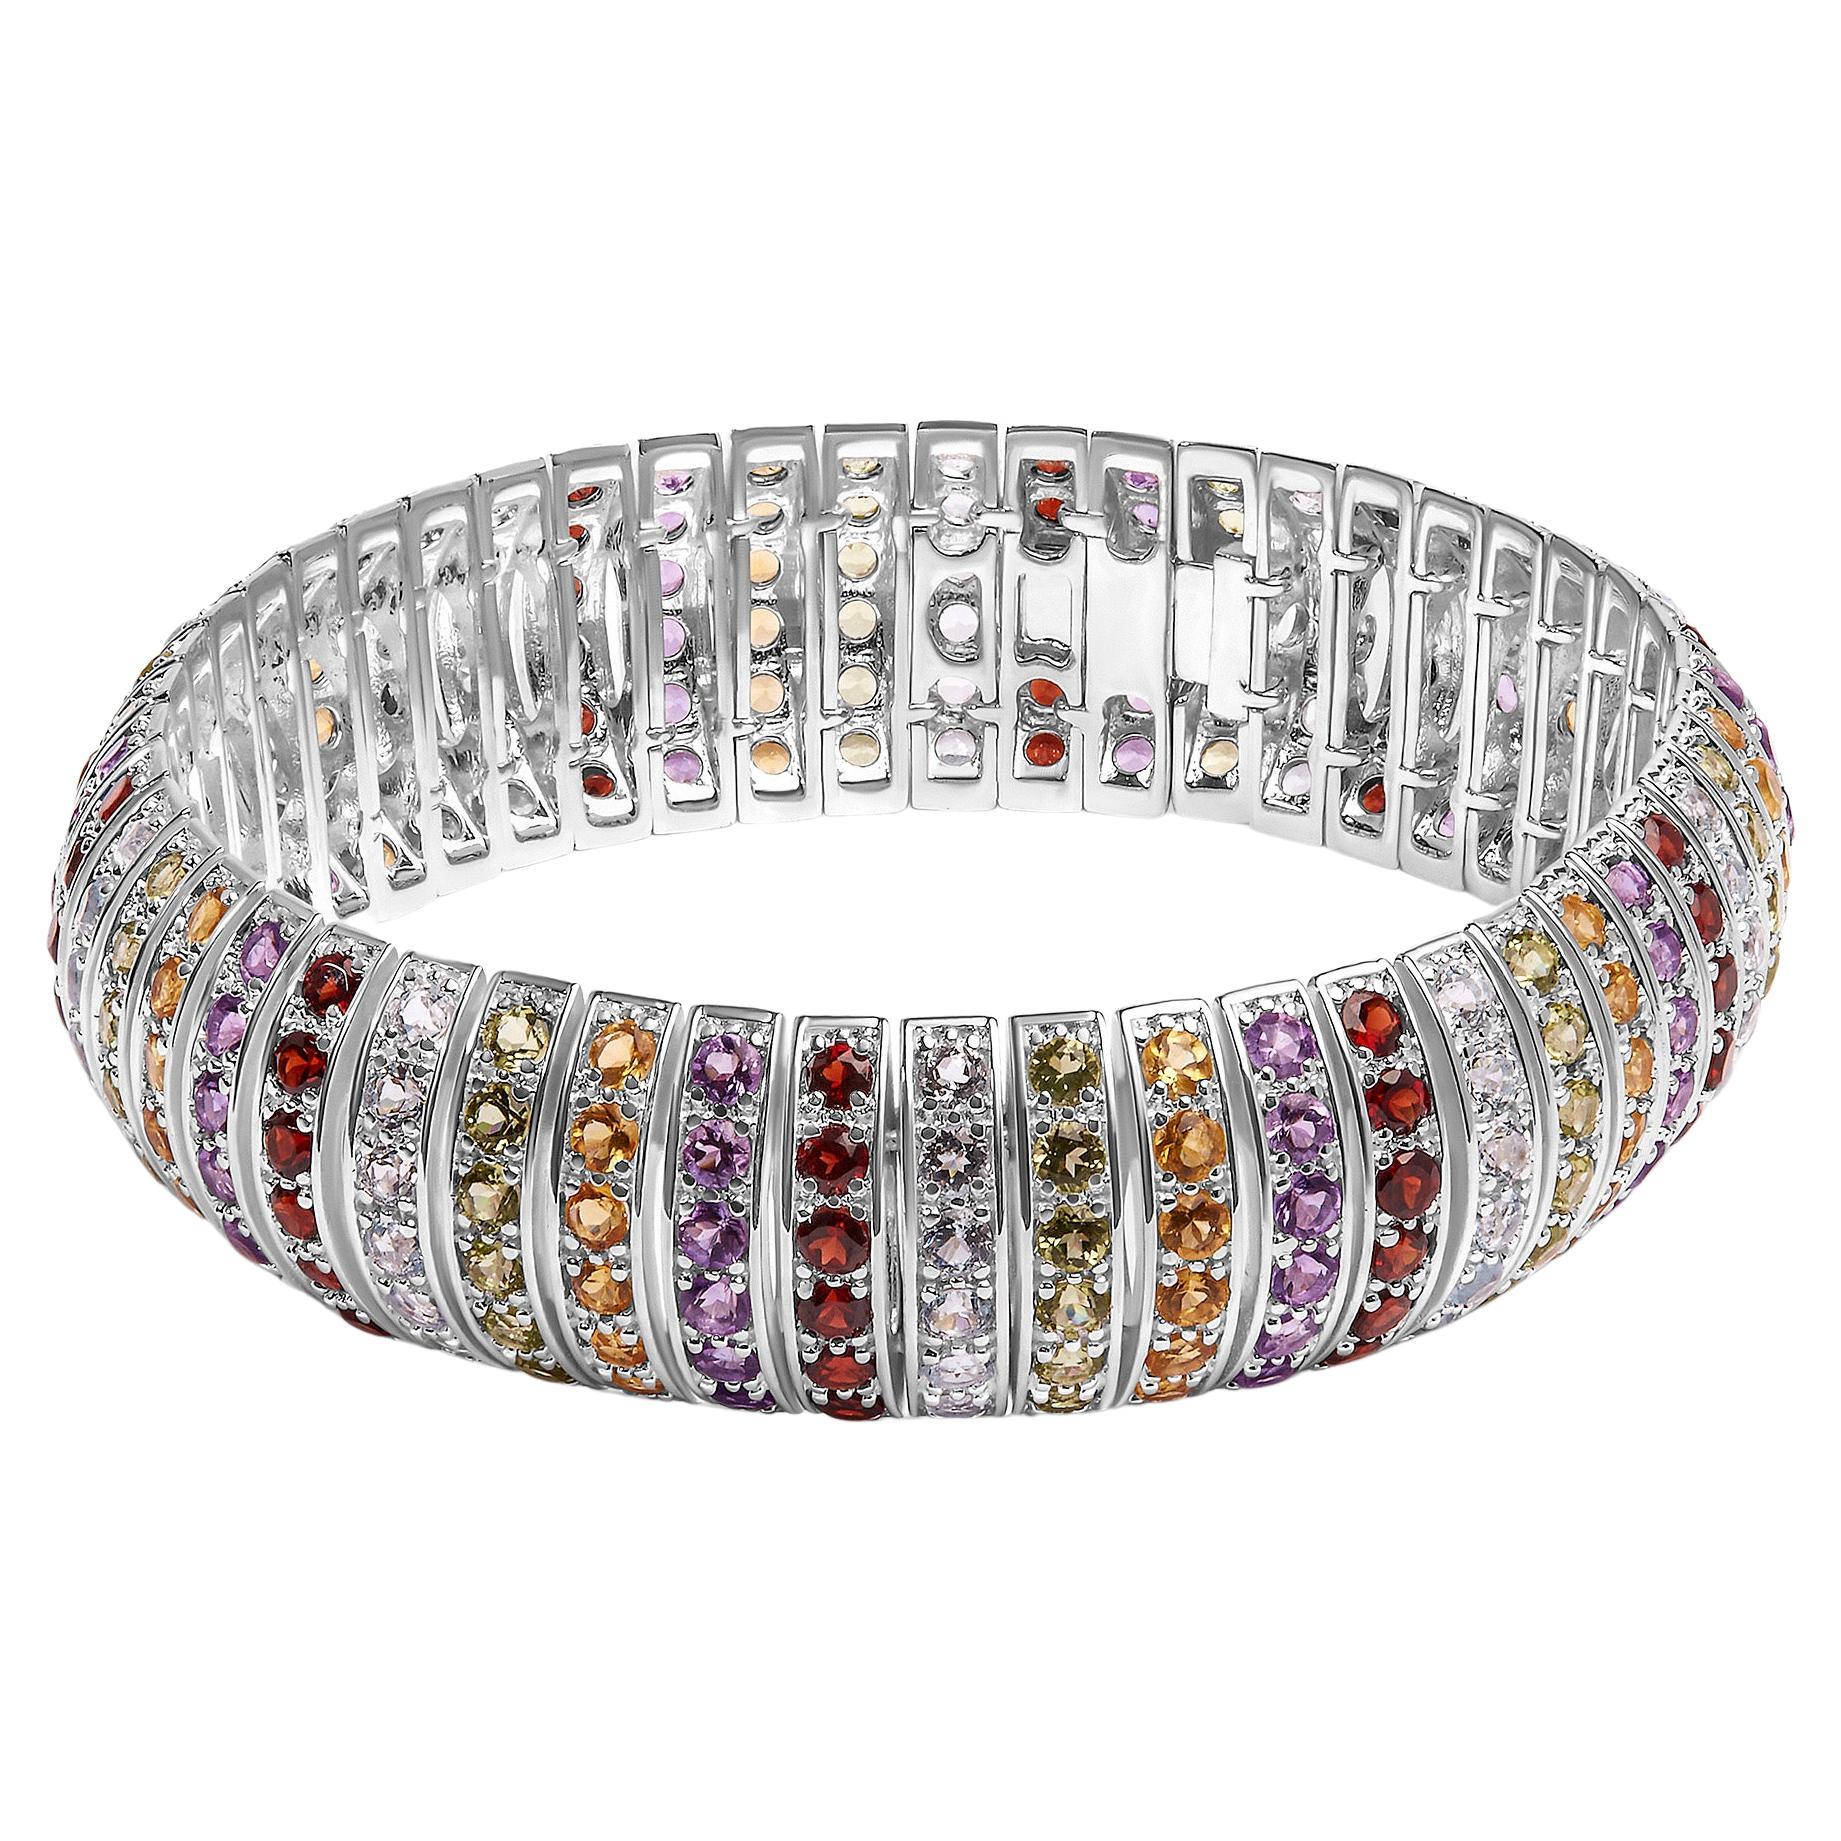 .925 Sterling Silver Multi Row Rainbow Gemstone Bangle Bracelet